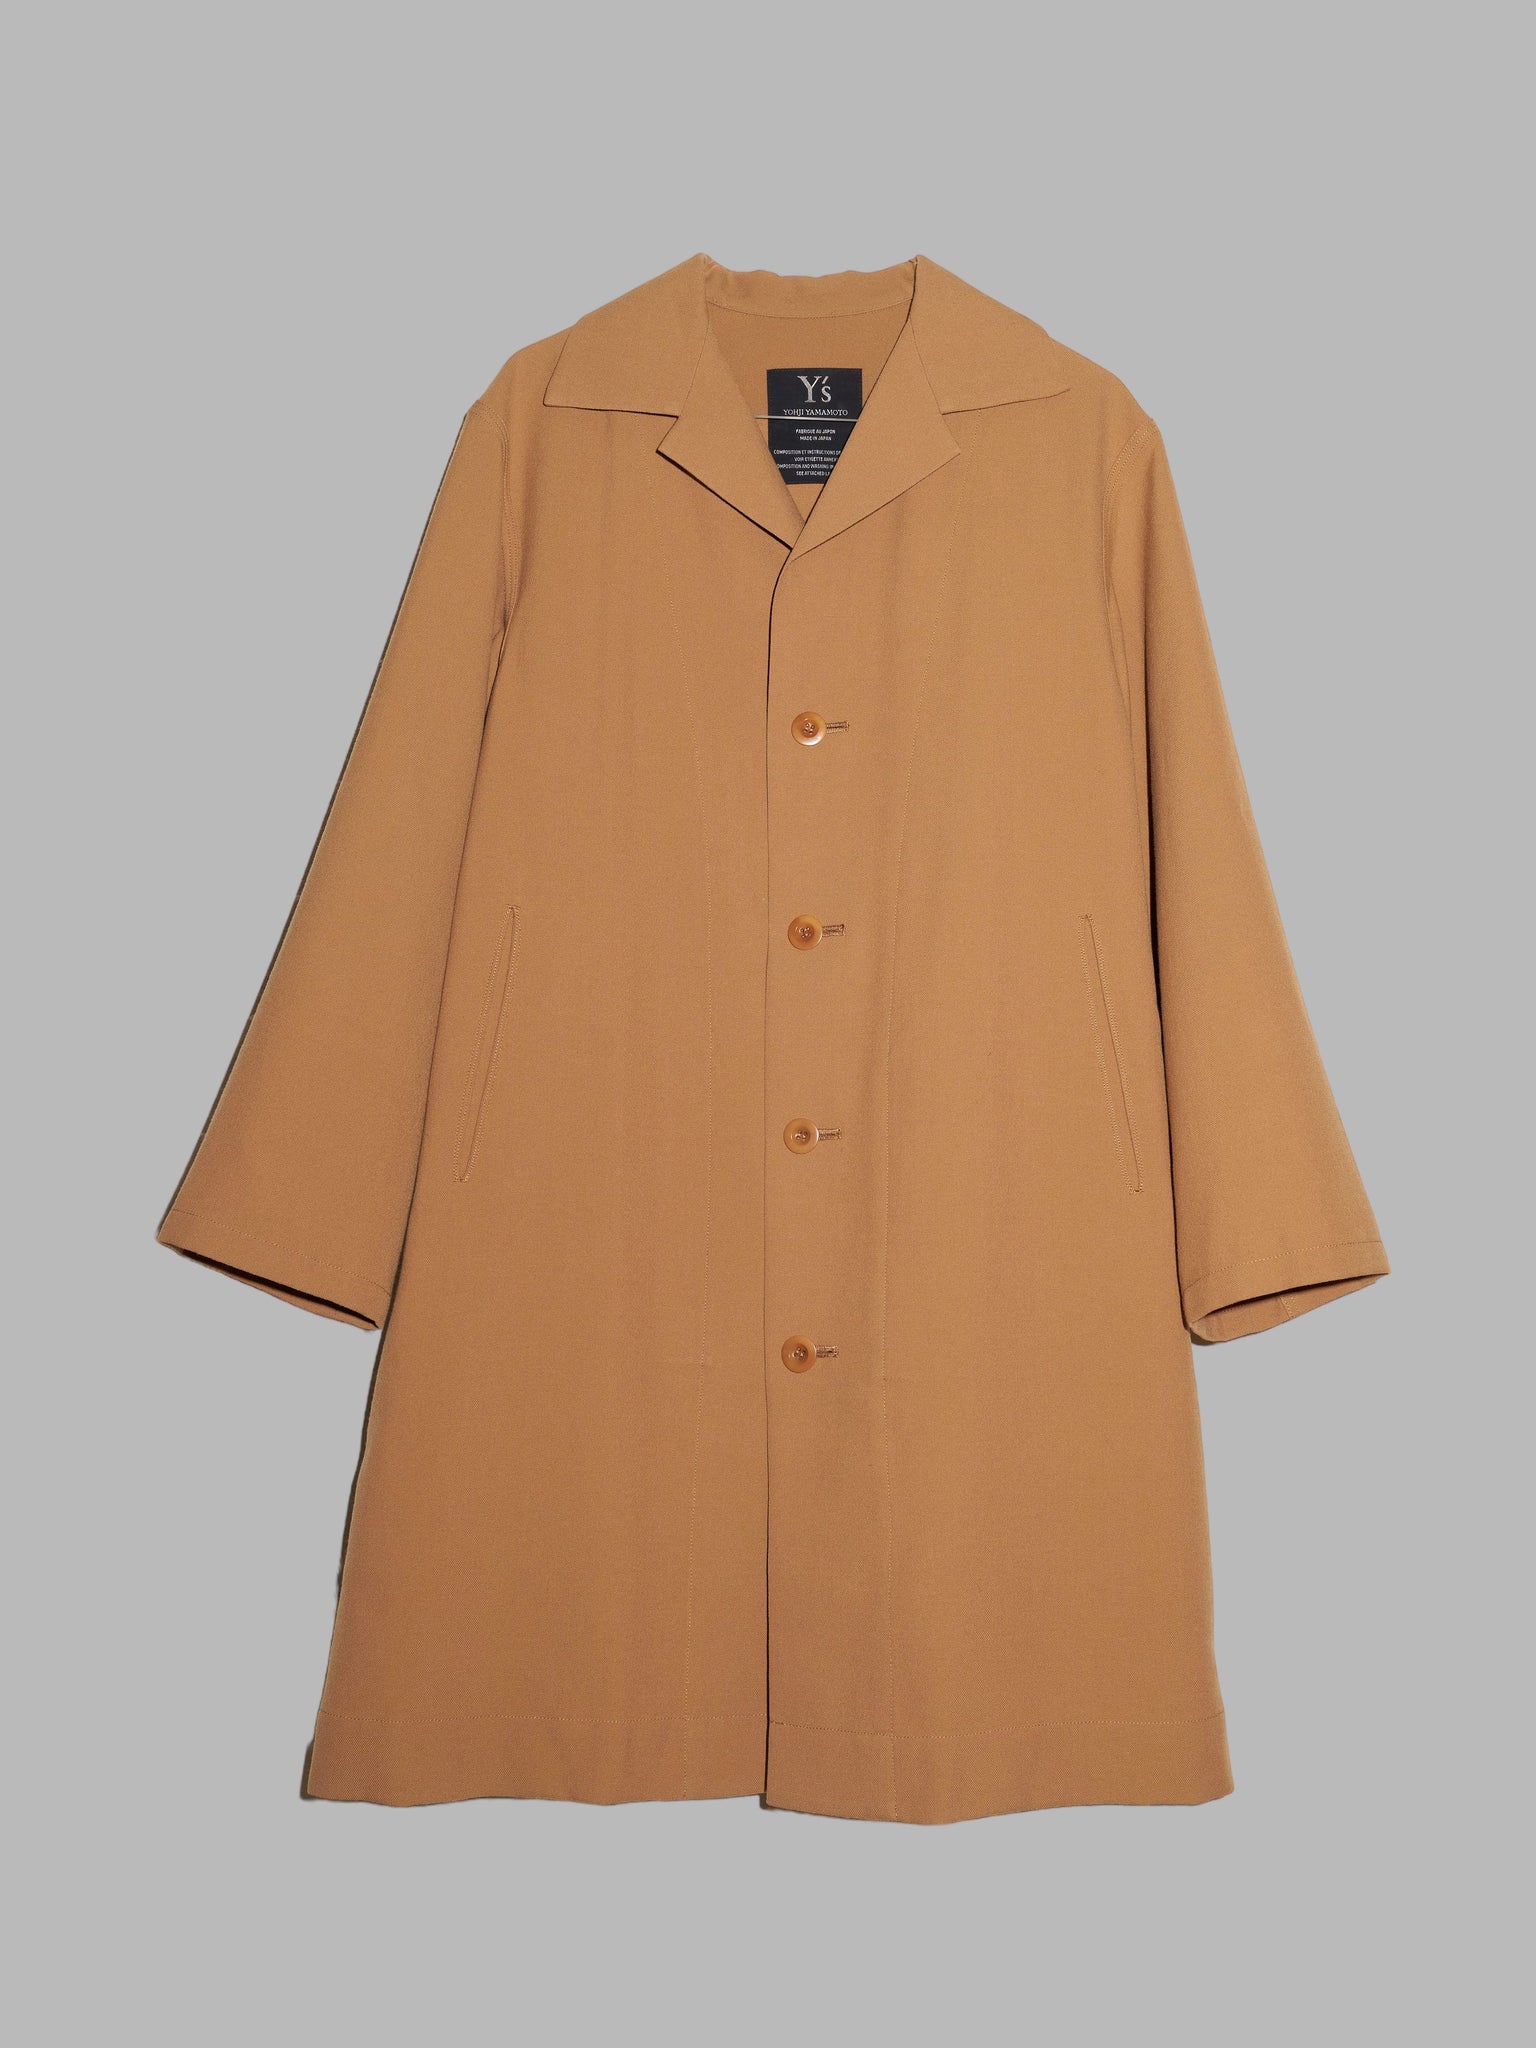 Y’s Yohji Yamamoto 2000s beige wool four button coat